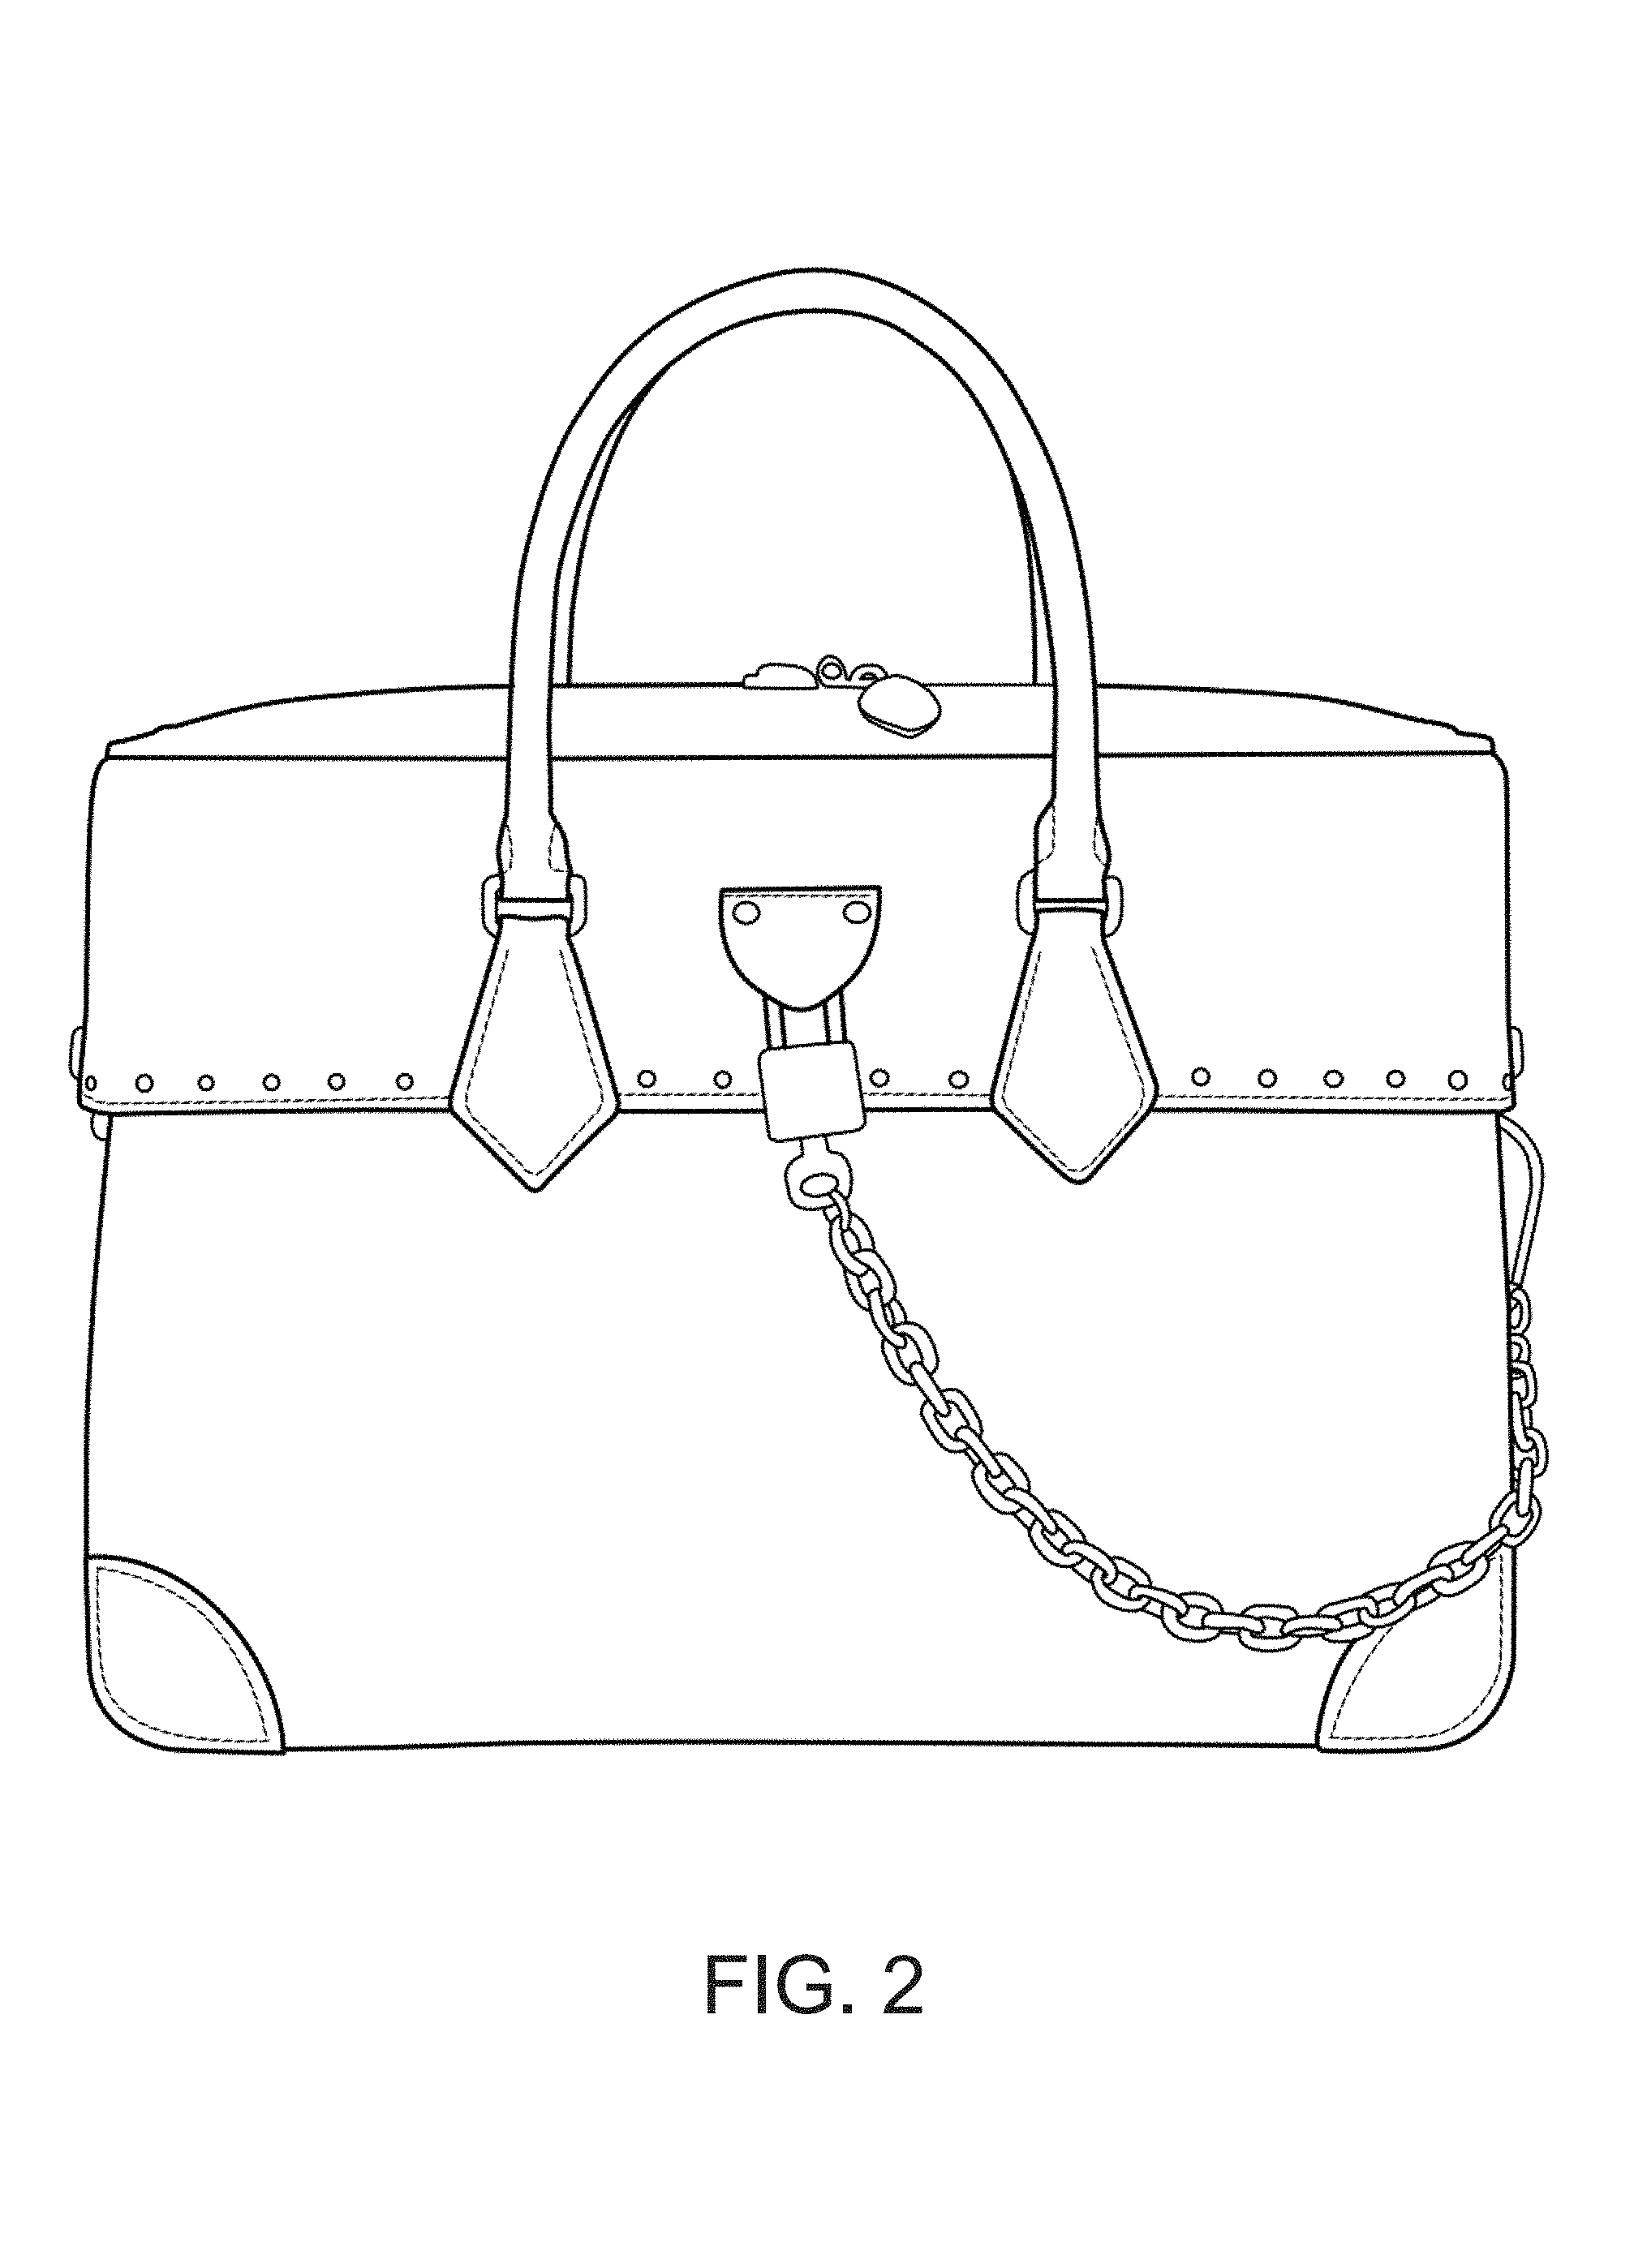 Handbag Patent Grant Bertrand Dec [LOUIS VUITTON MALLETIER]